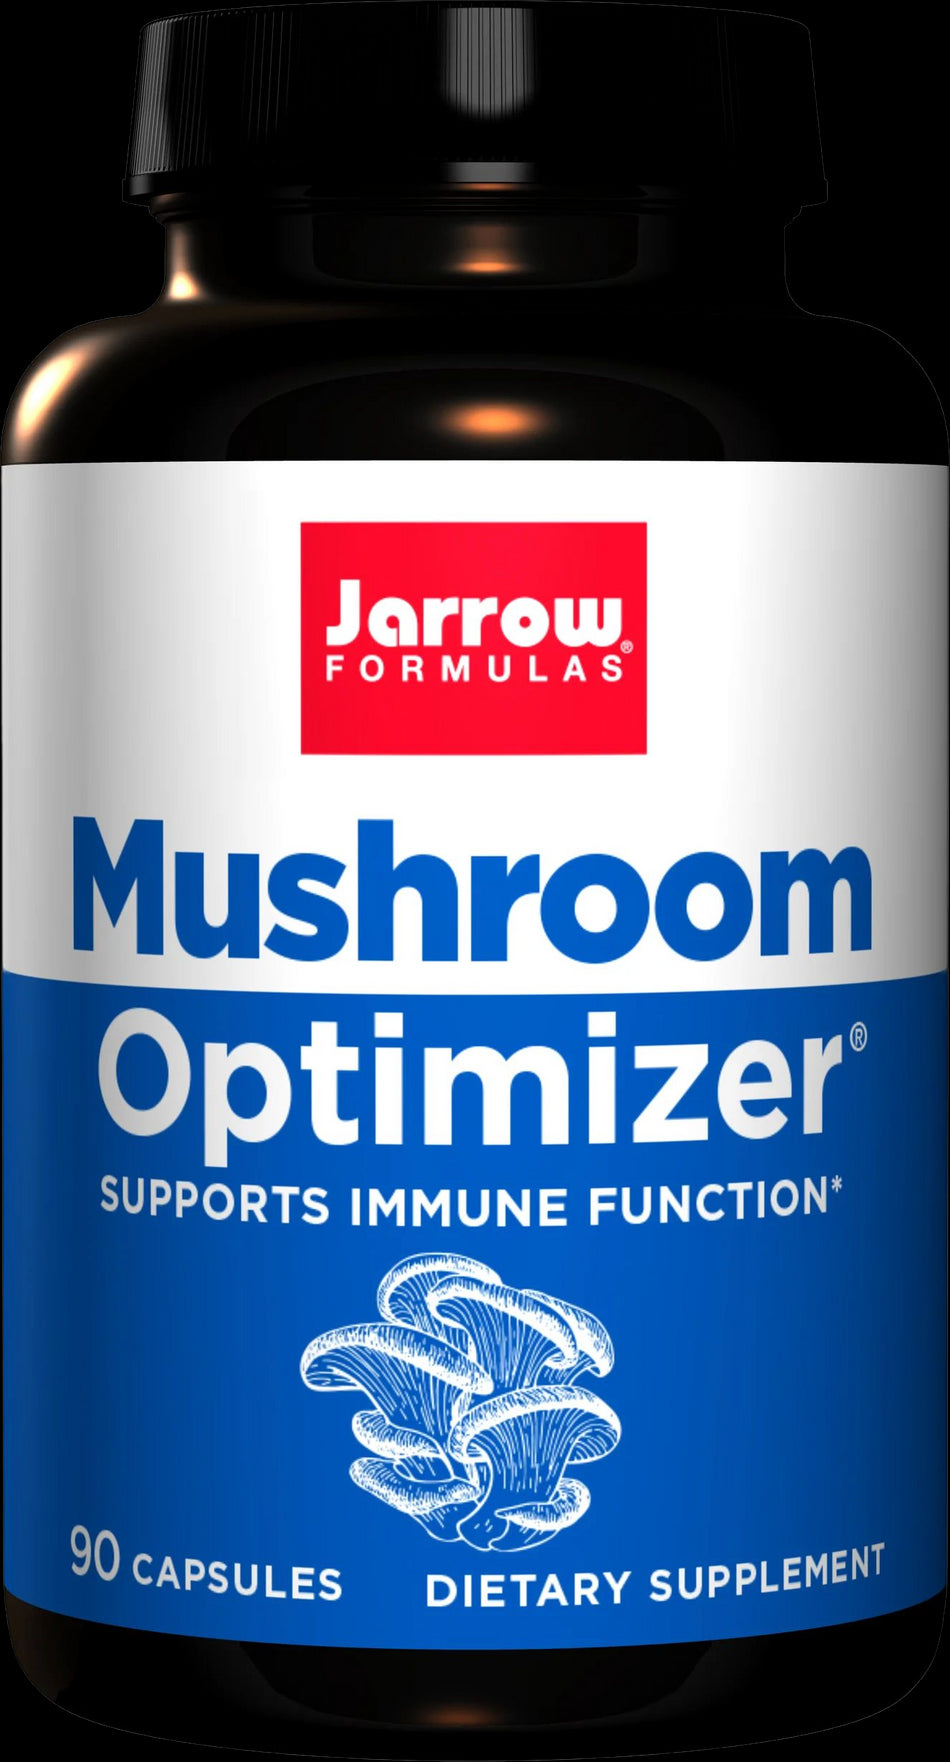 Mushroom Optimizer - BadiZdrav.BG